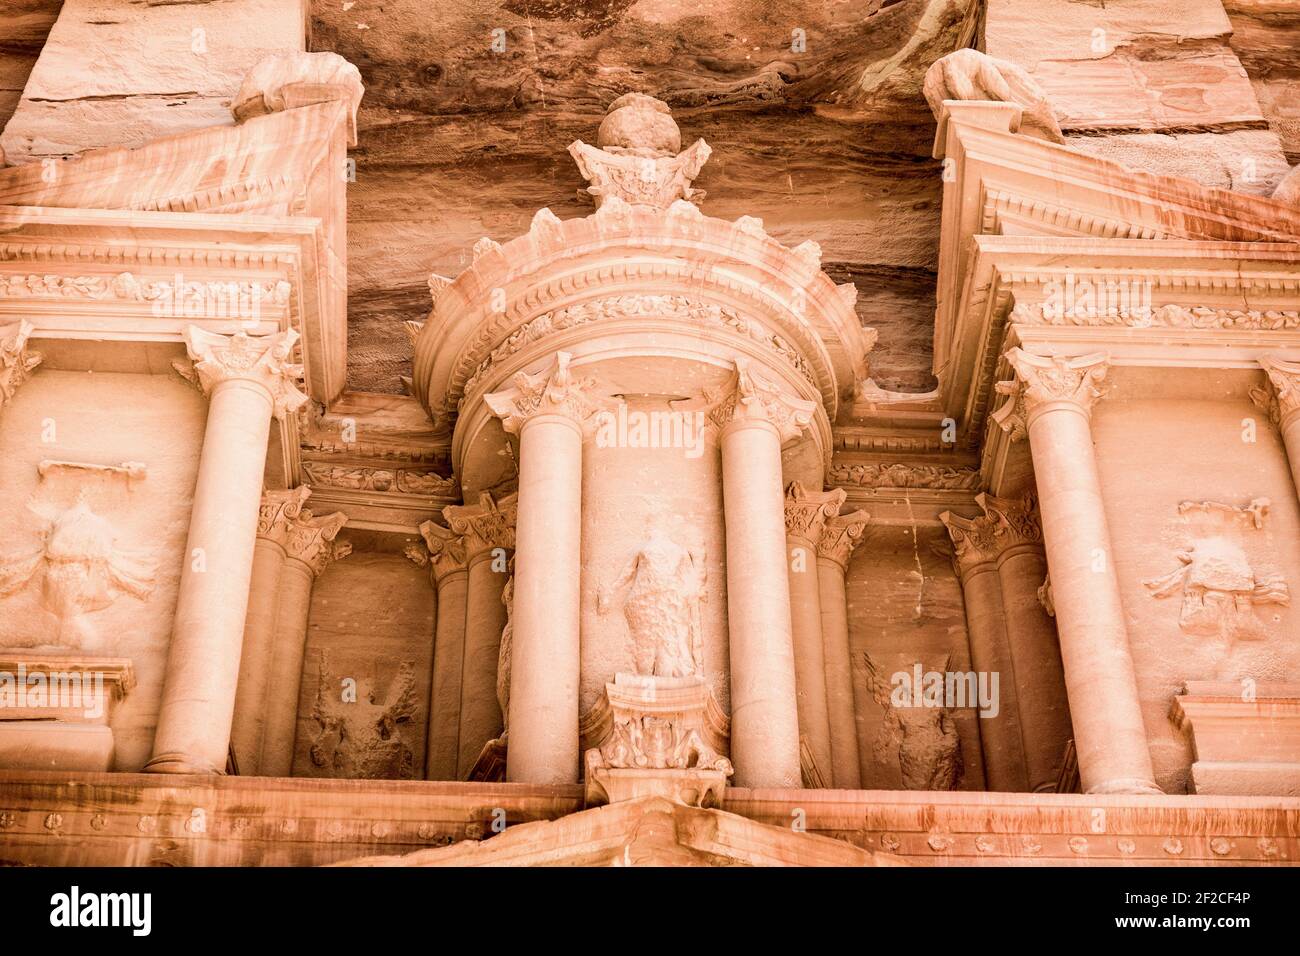 Front view of facade of Al-Khazneh temple - The Treasury - in Arab Nabatean Kingdom city of Petra, Jordan Stock Photo